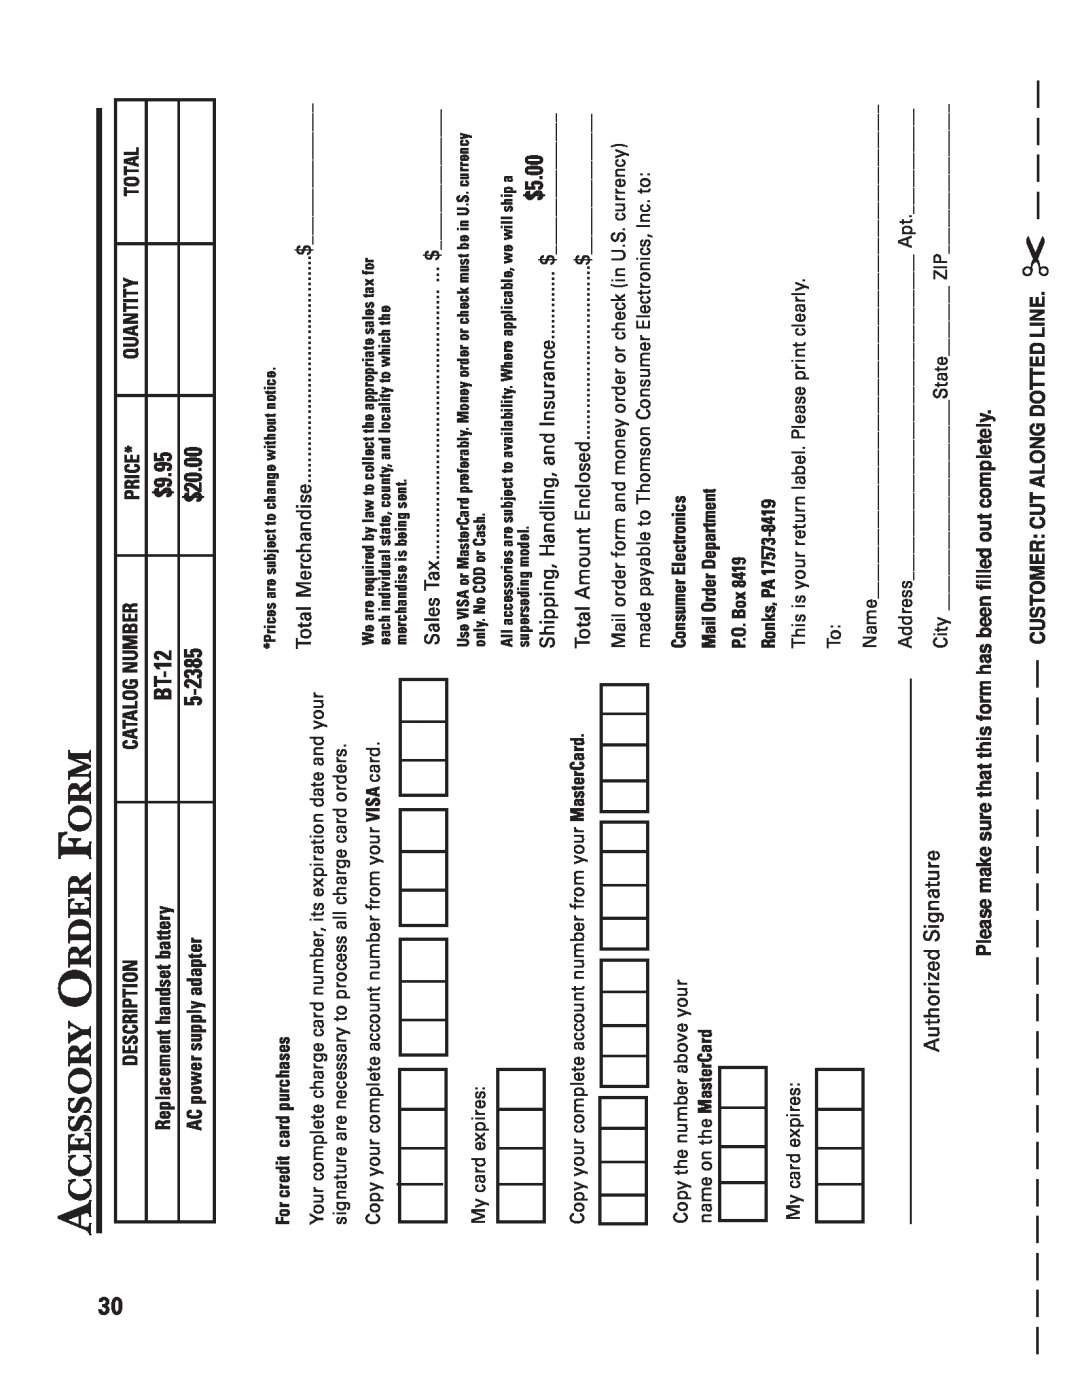 GE 2-9772 Accessory Order Form, $9.95, $20.00, Signature Authorized, Description, Catalog Number, Price, Quantity, Total 